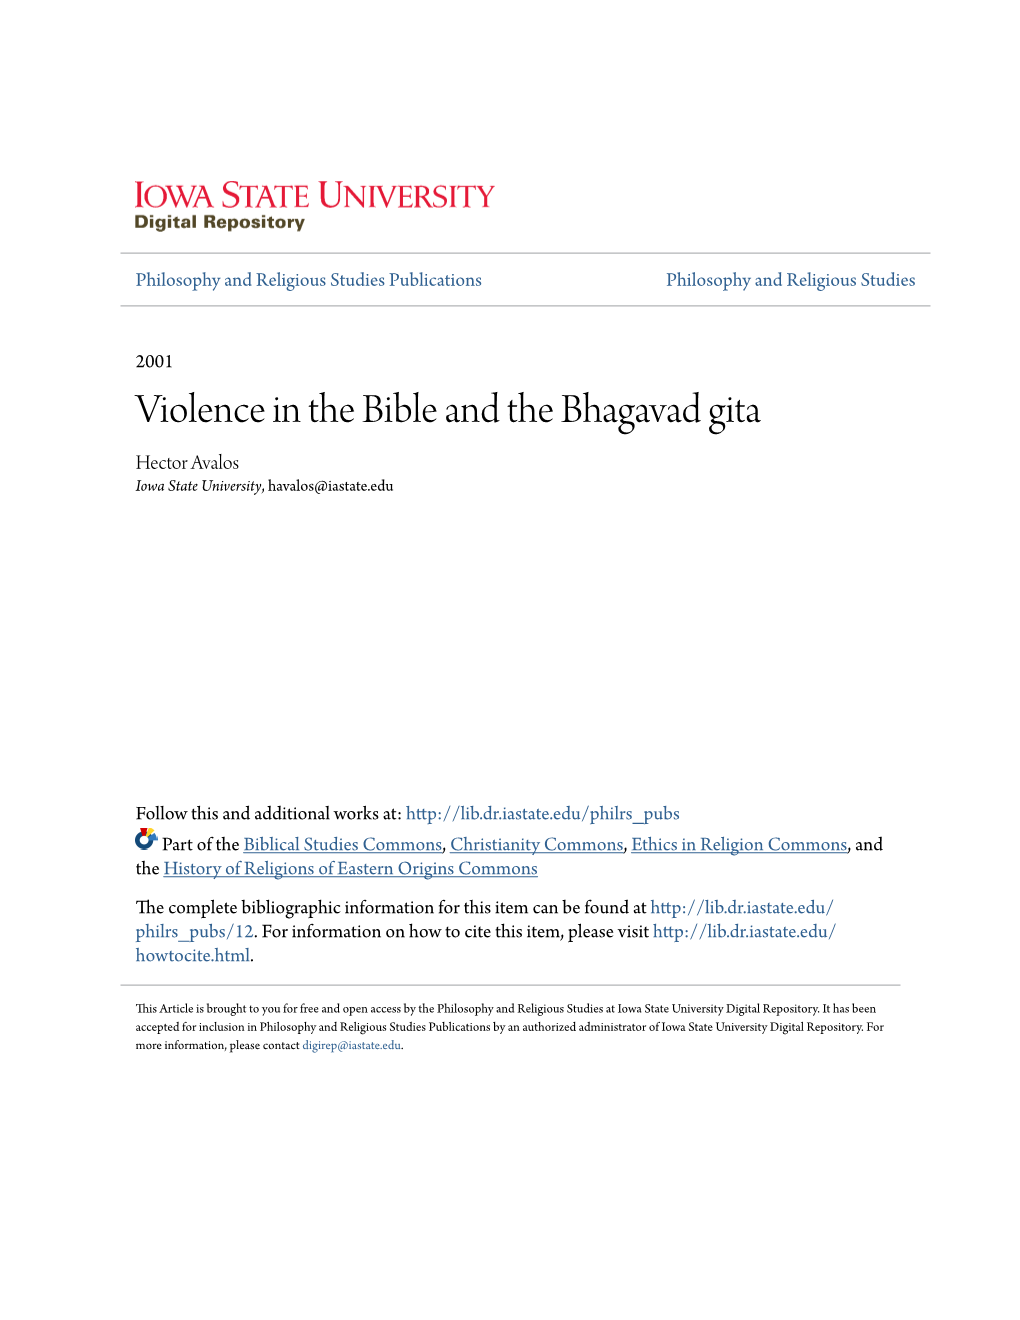 Violence in the Bible and the Bhagavad Gita Hector Avalos Iowa State University, Havalos@Iastate.Edu